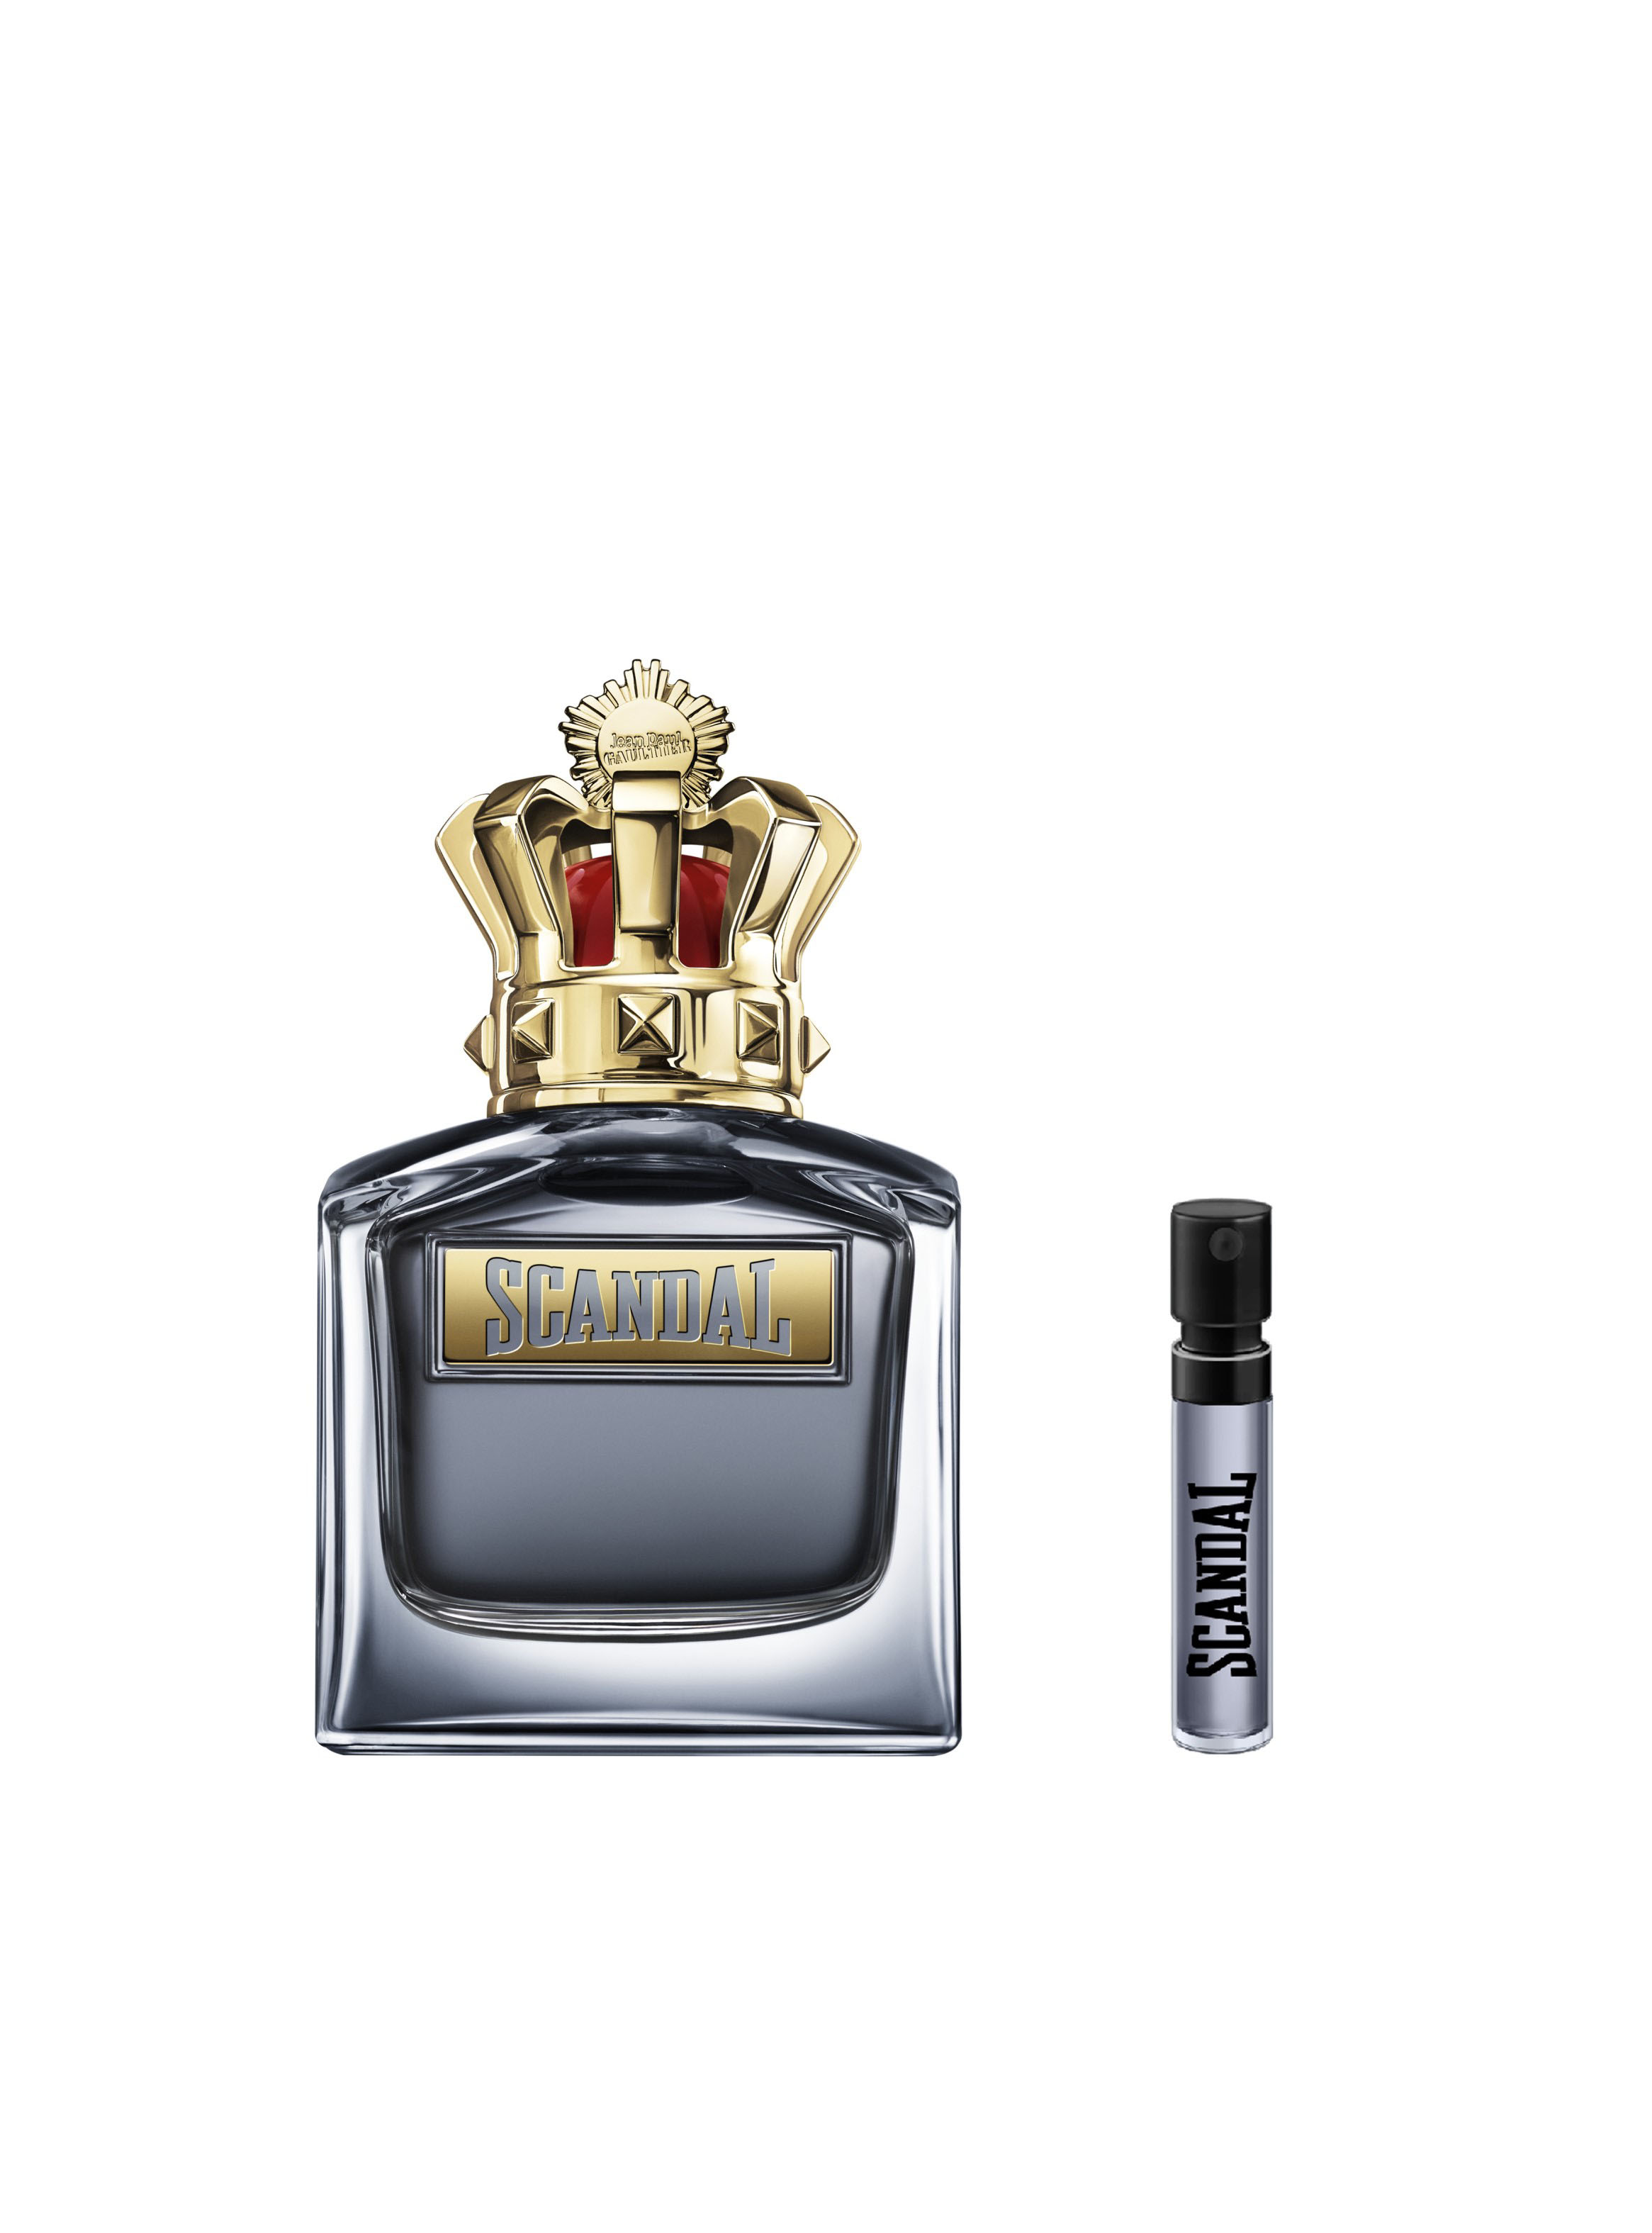 Perfume Jean Paul Gaultier Scandal Pour Homme EDT 50 ml + Muestra 1.5 ml